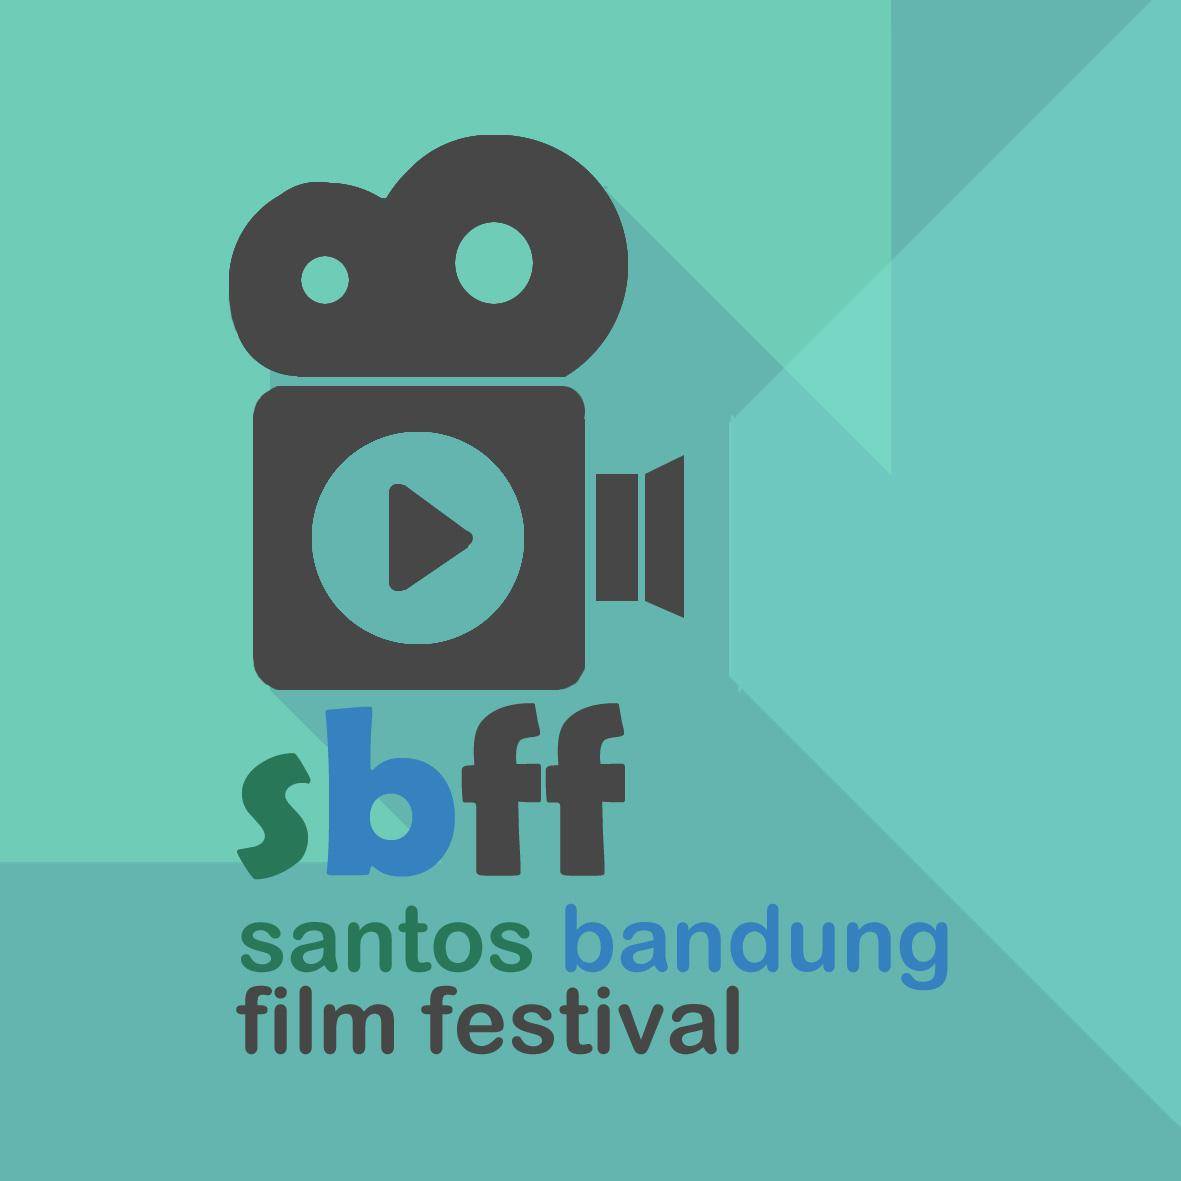 01_PRINCIPAL_SBFF Santos Bandung Film Festival Logo_Flavia Dantas 2017